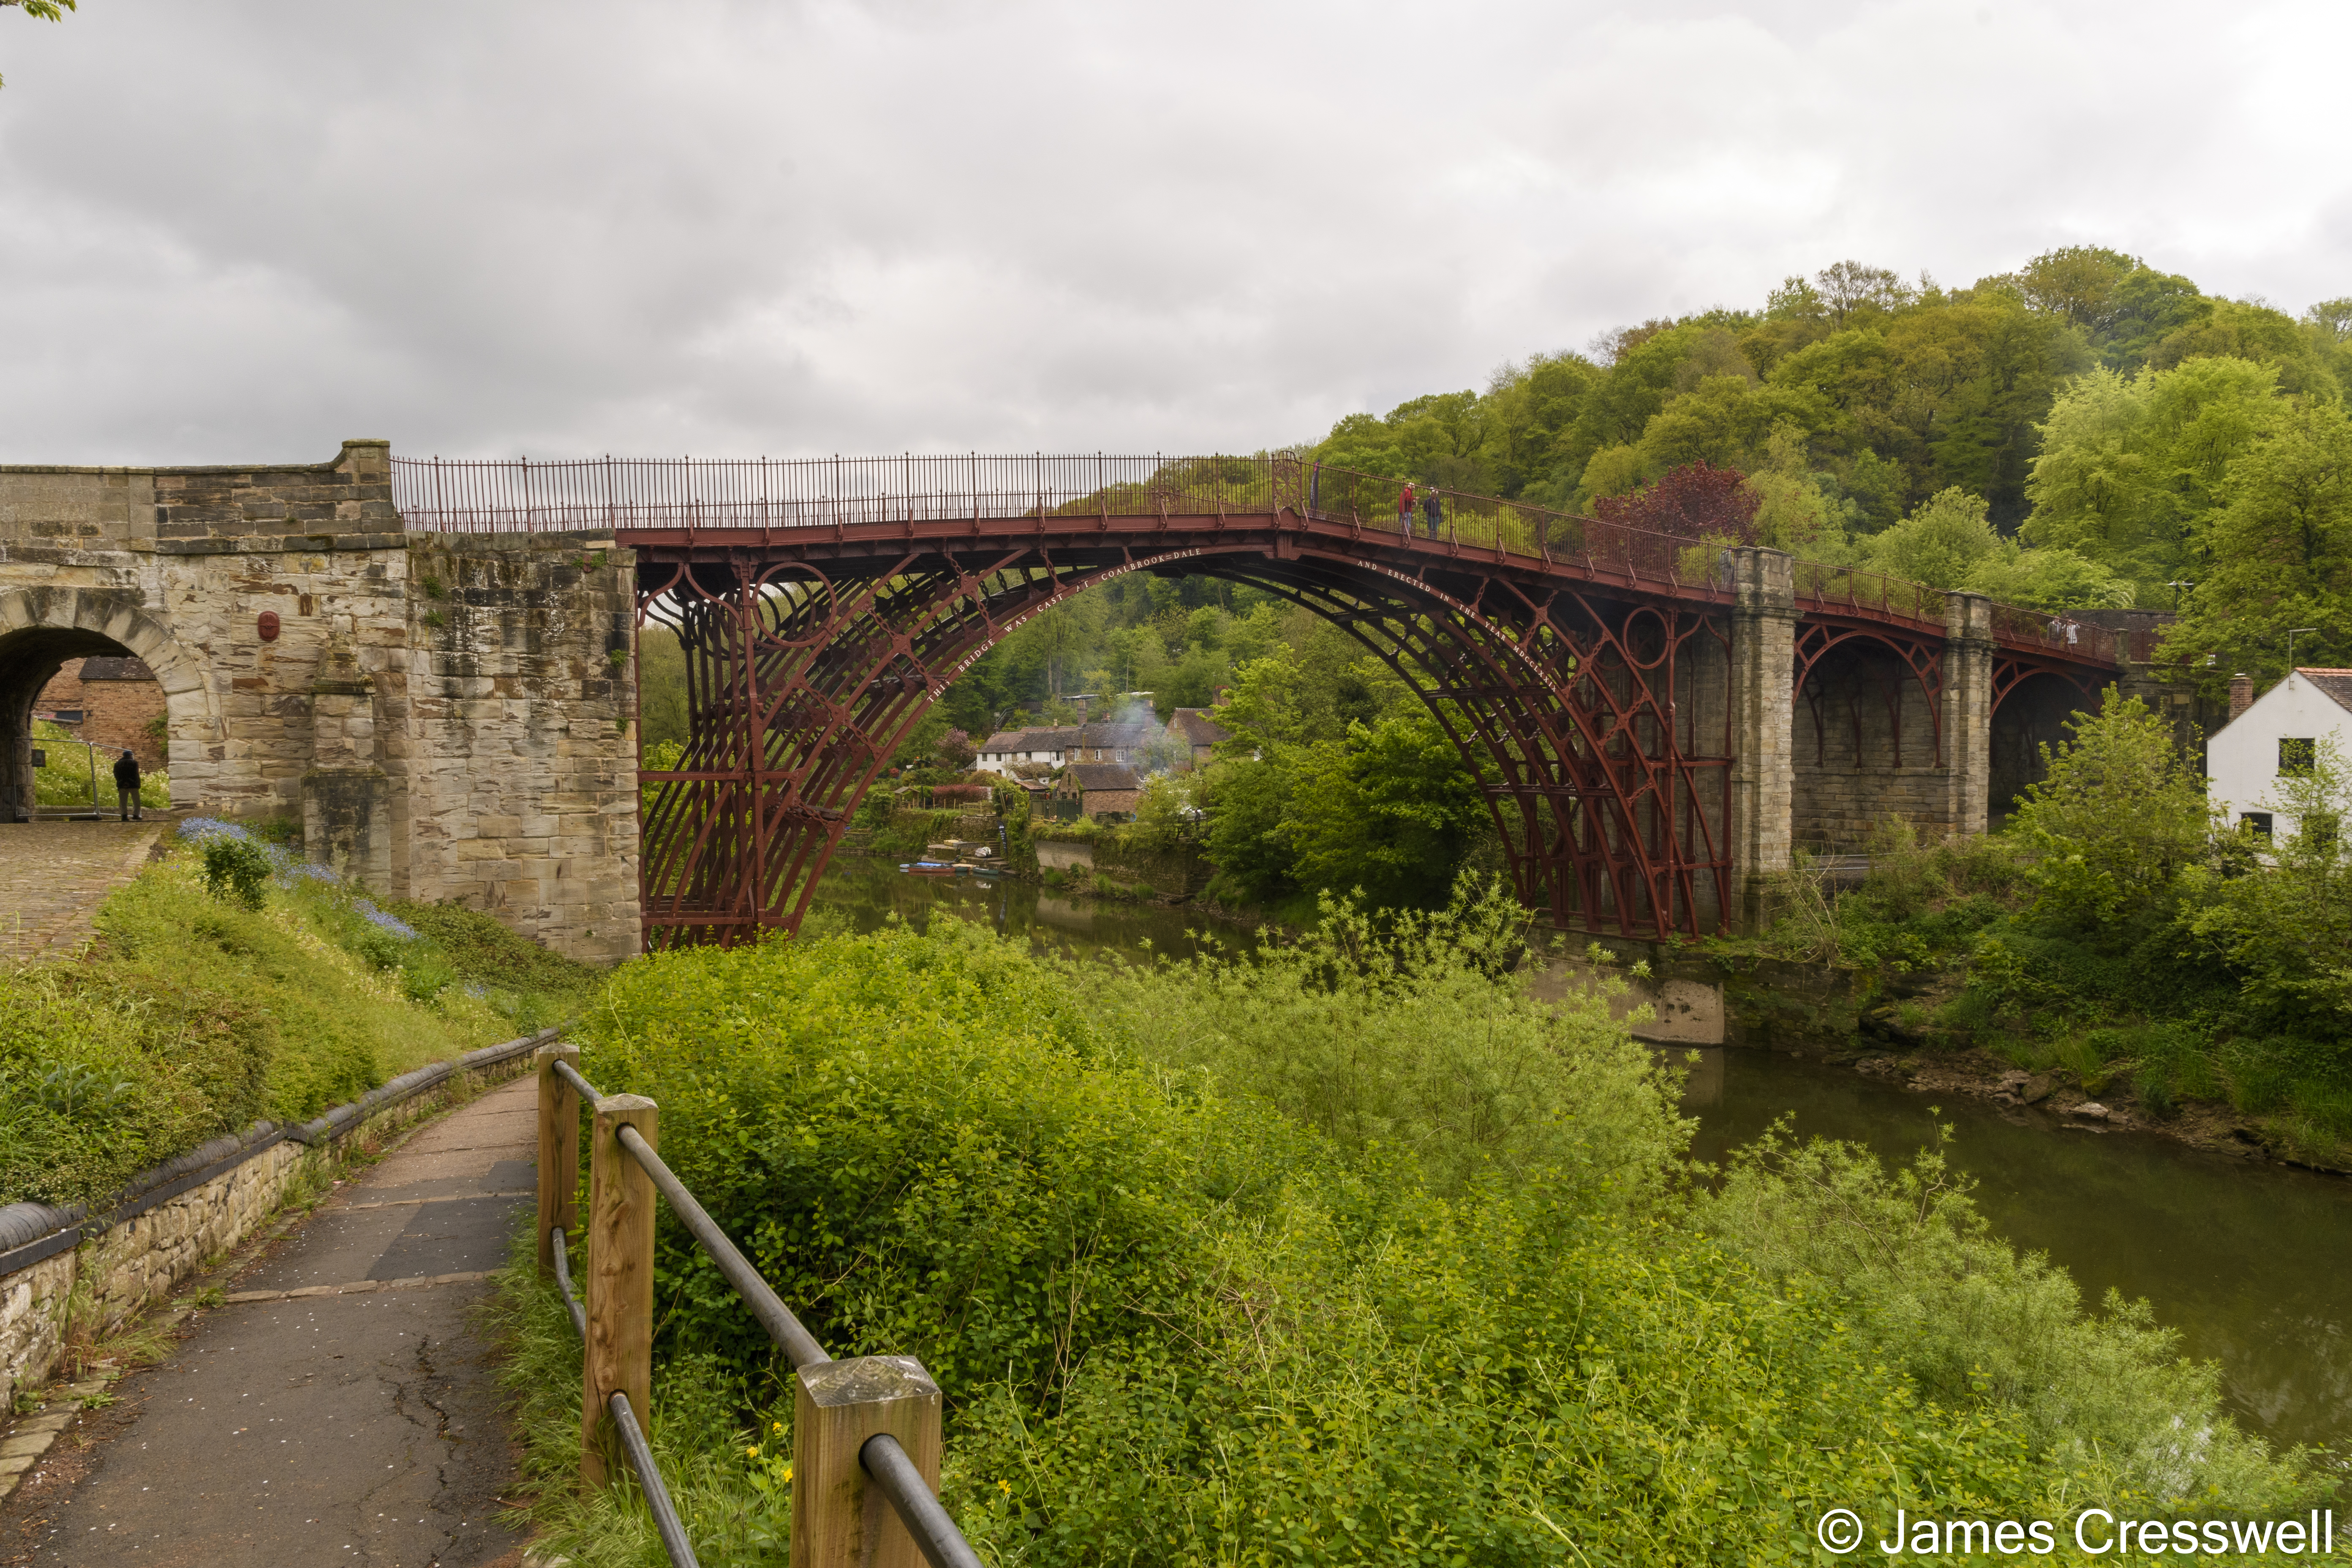 The iron bridge at Ironbridge